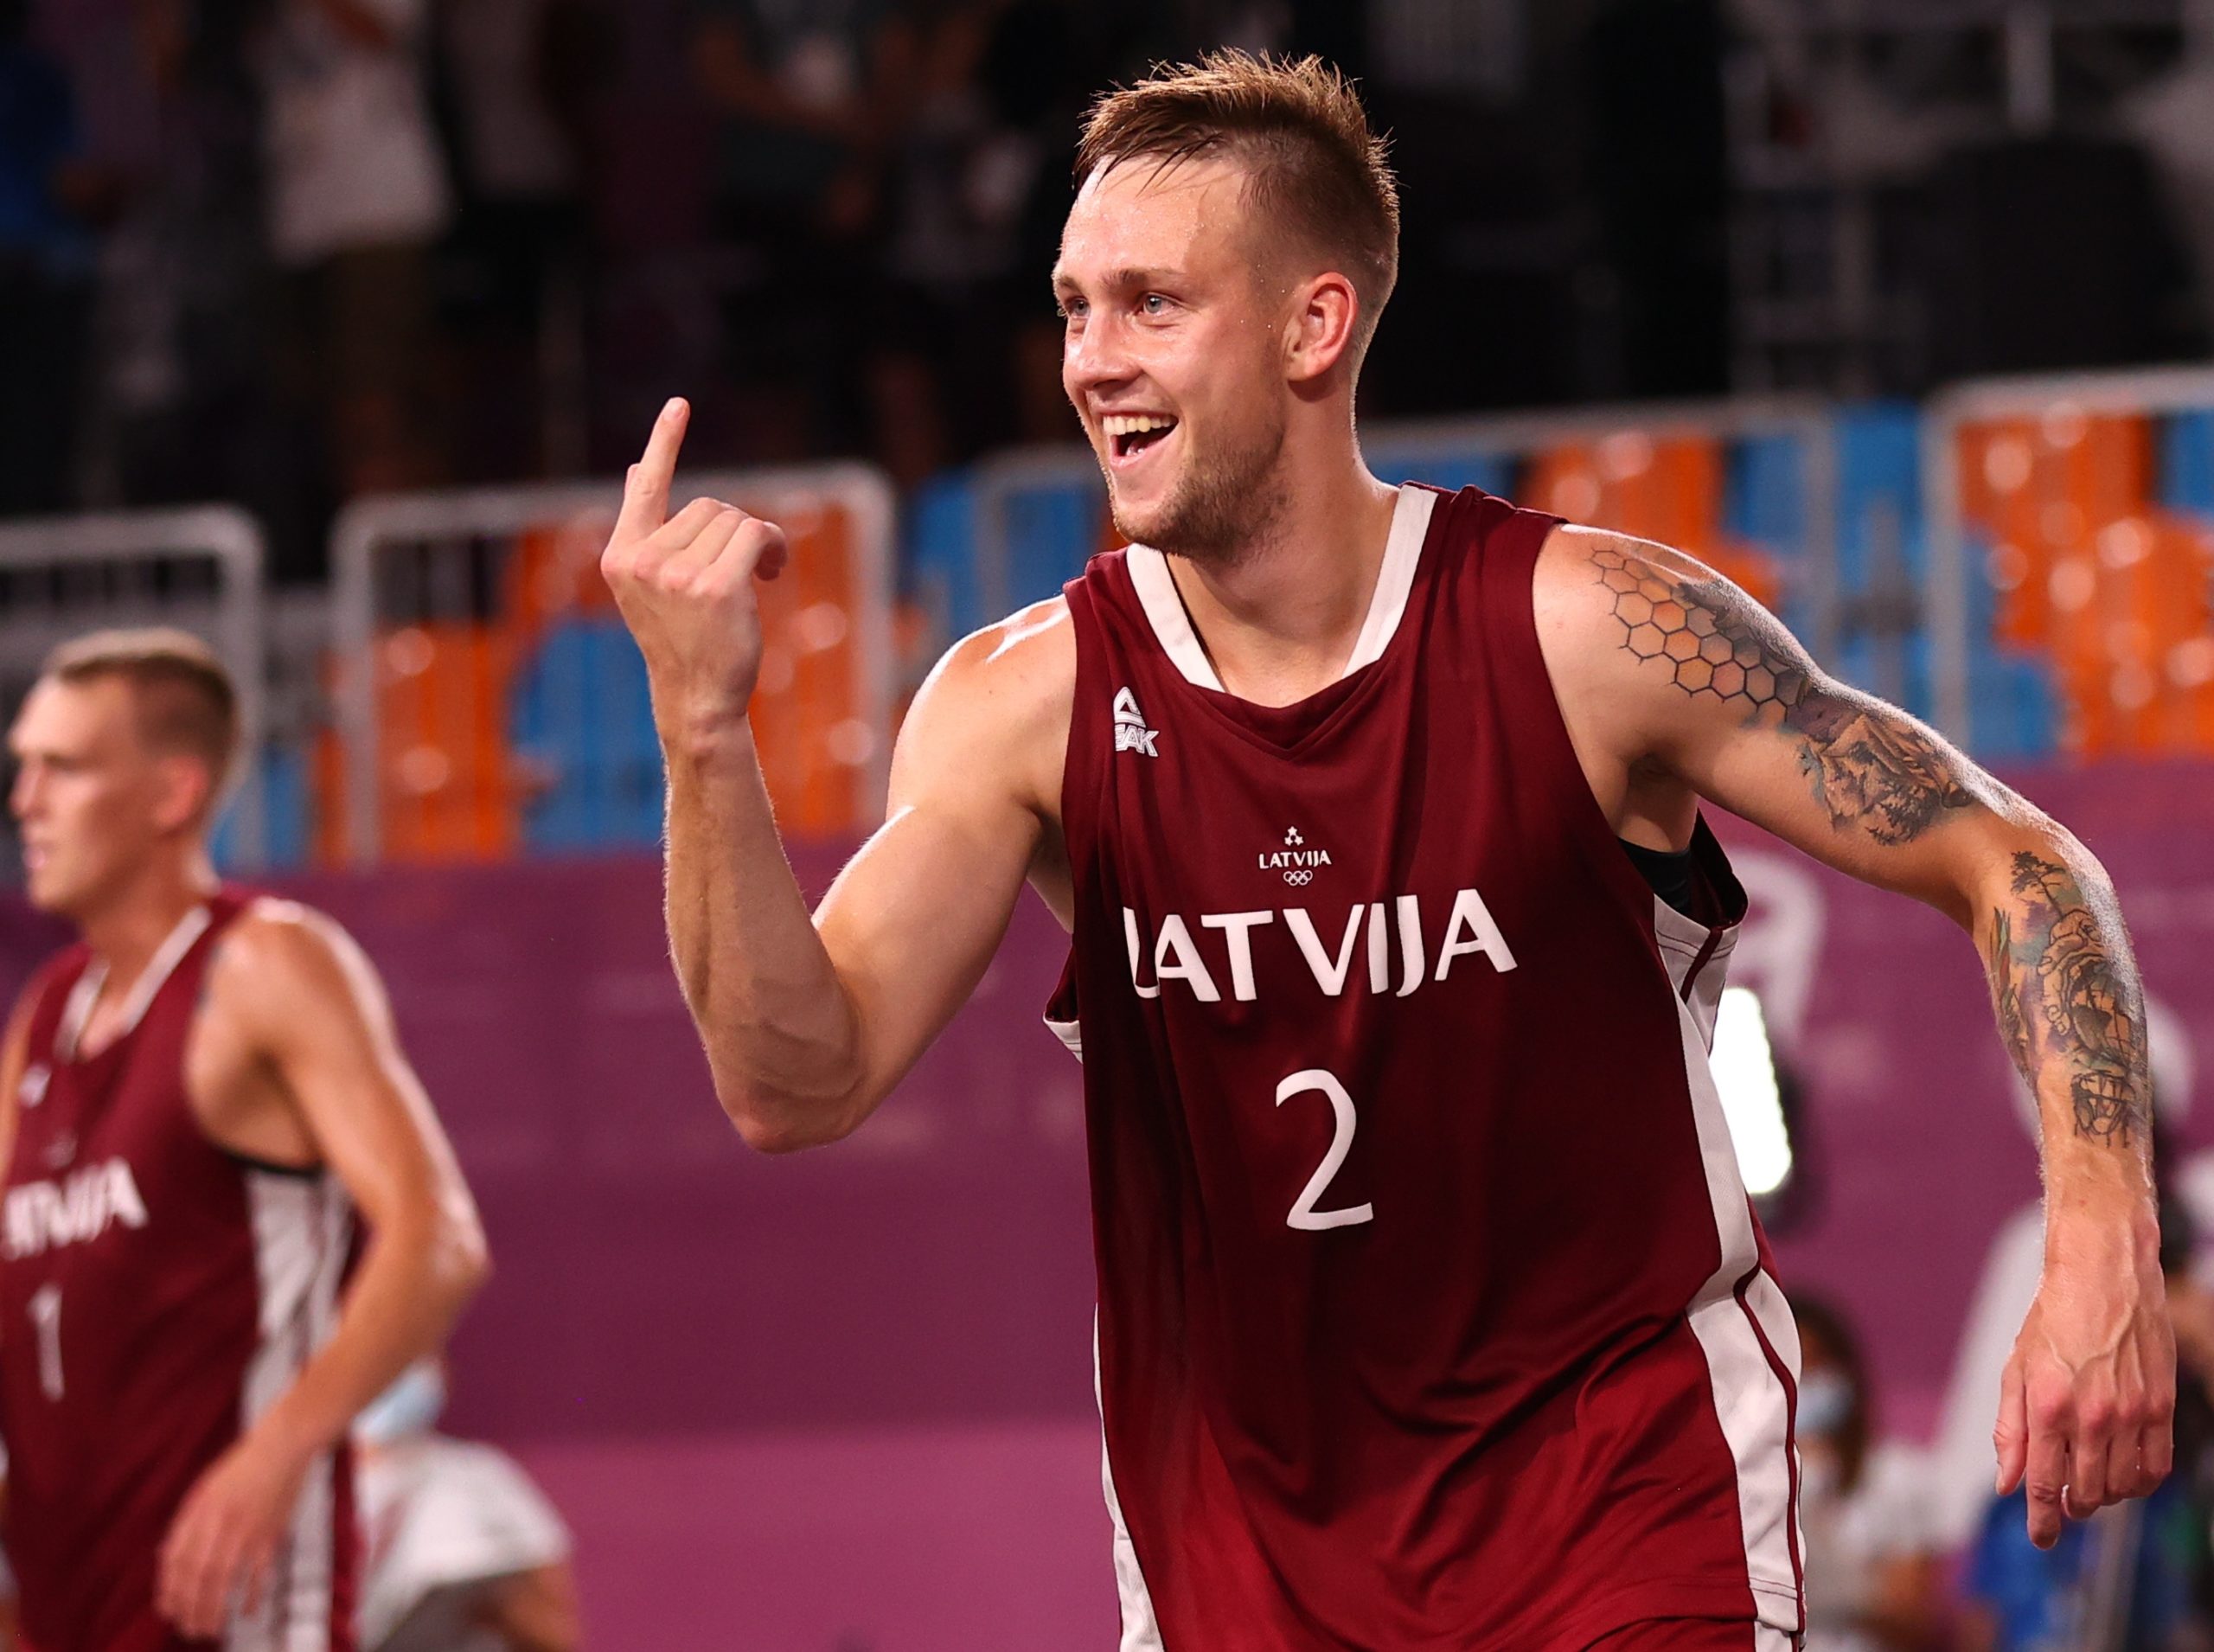 Karlis Lasmanis of Latviaa celebrates victory after the match.